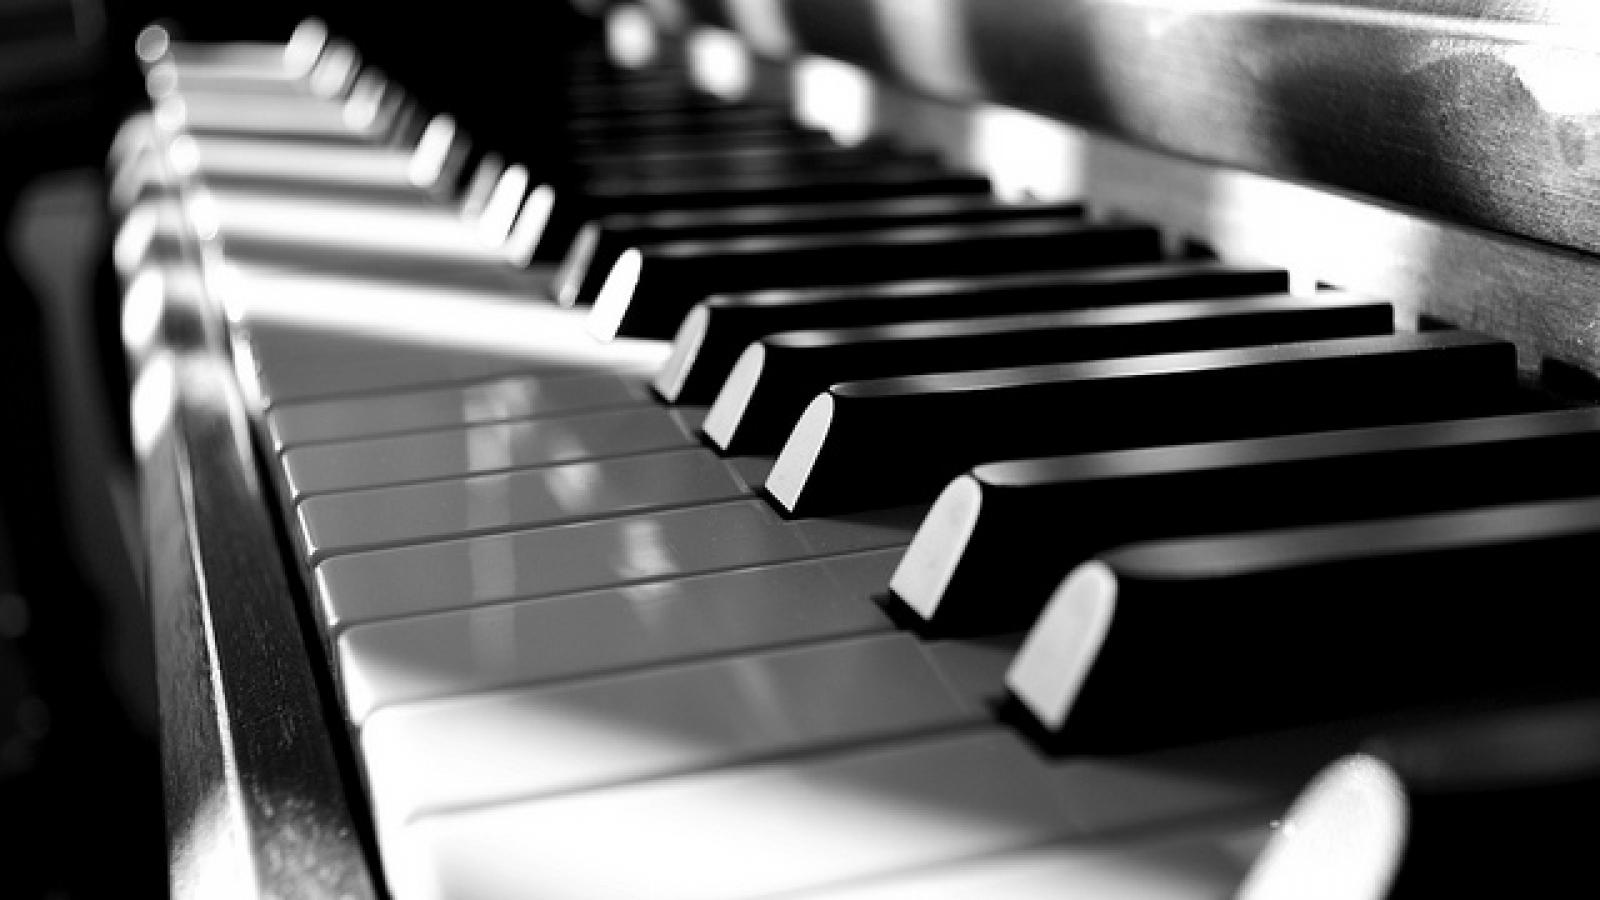 Black and white piano keyboard close-up